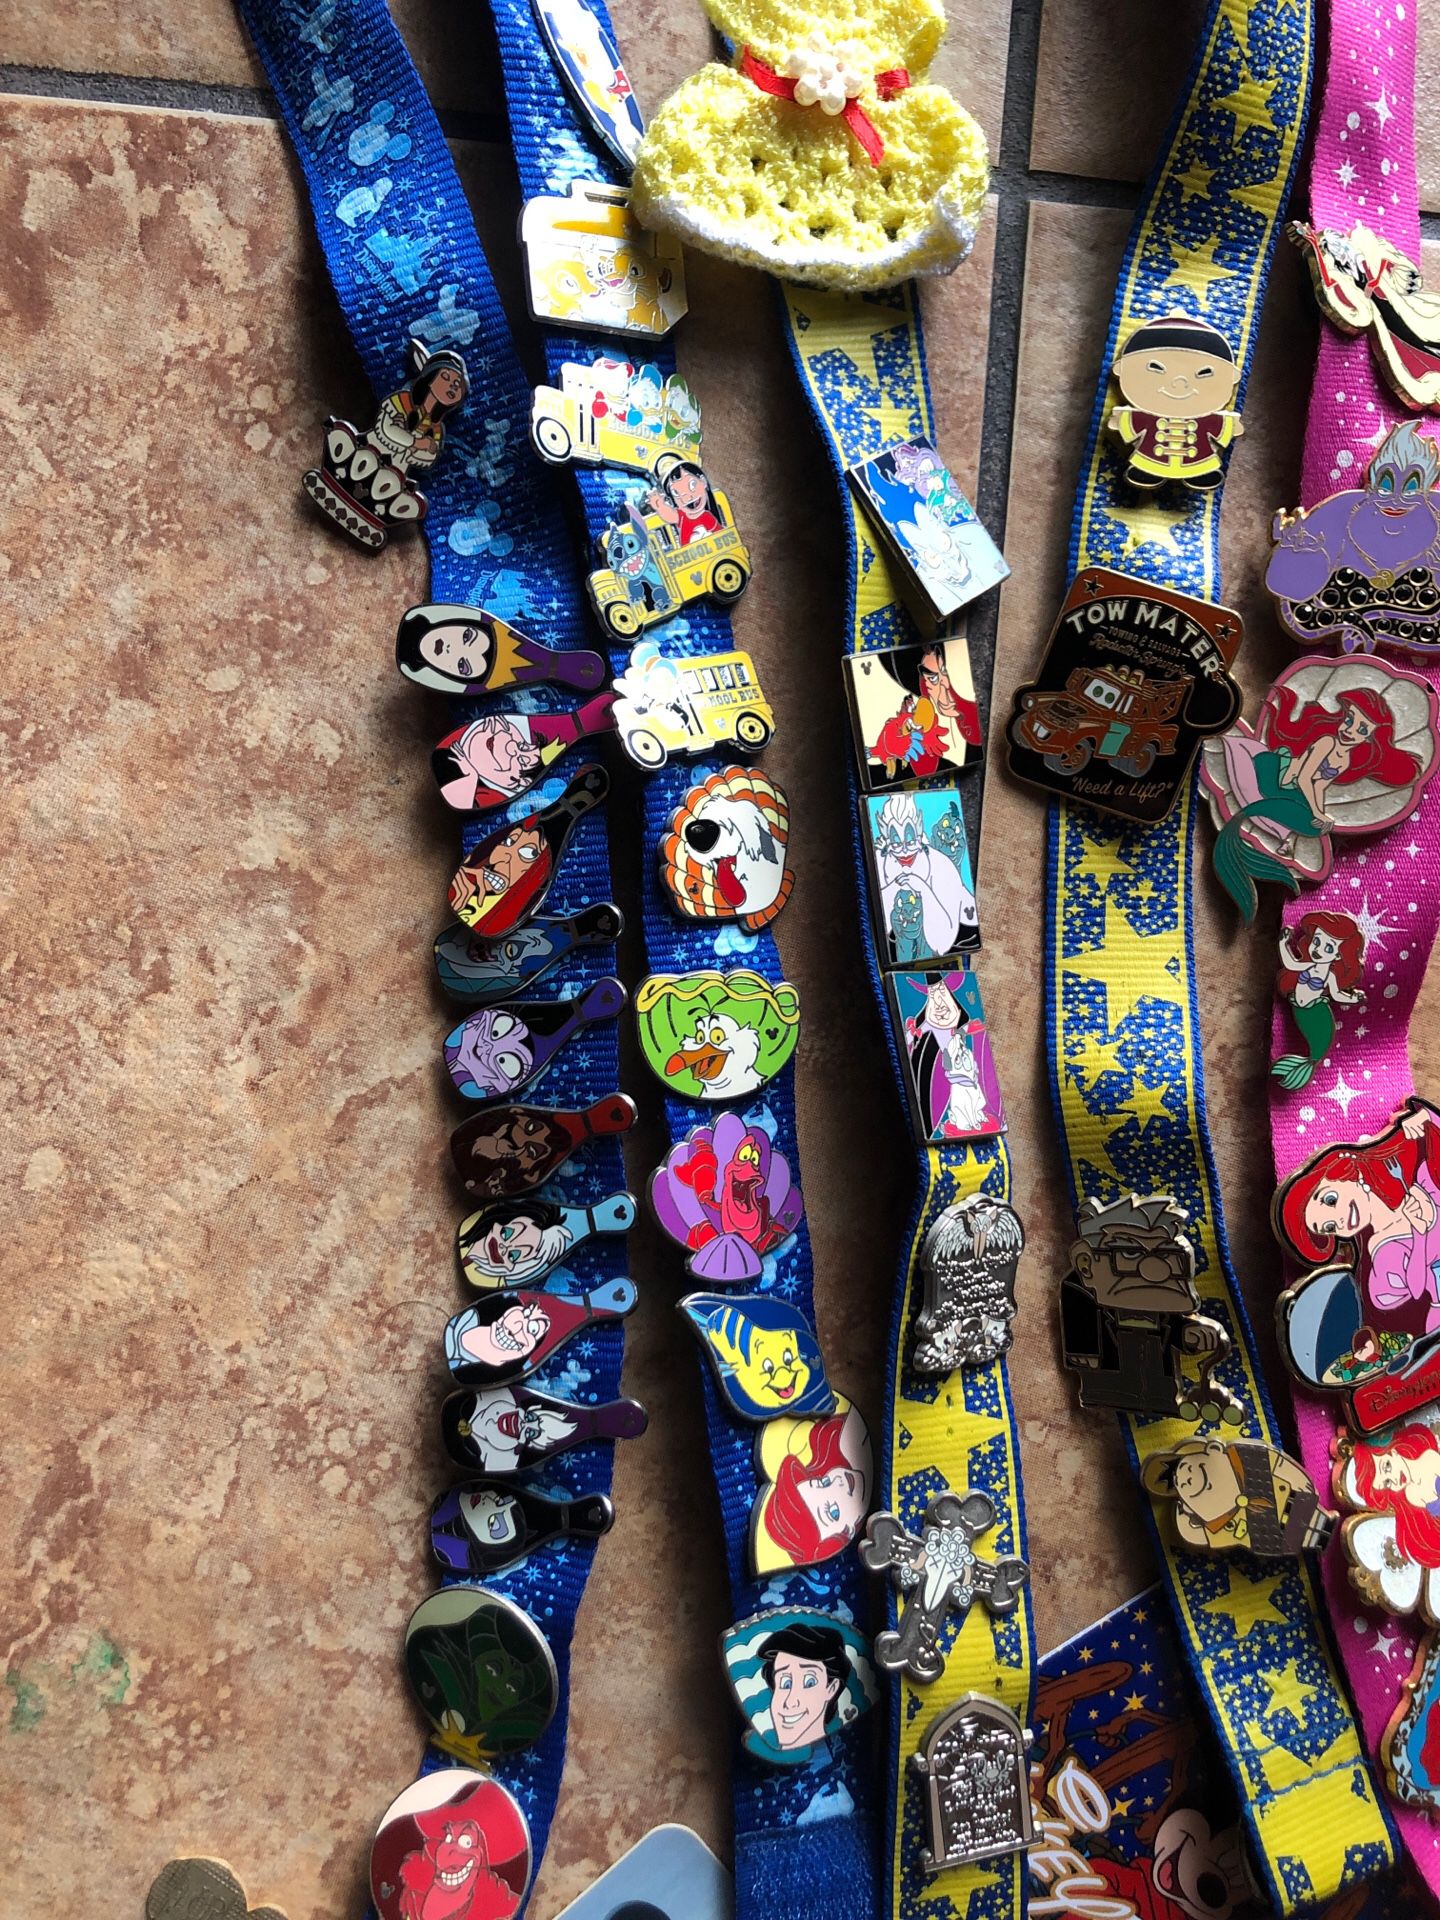 Disney collectible pins